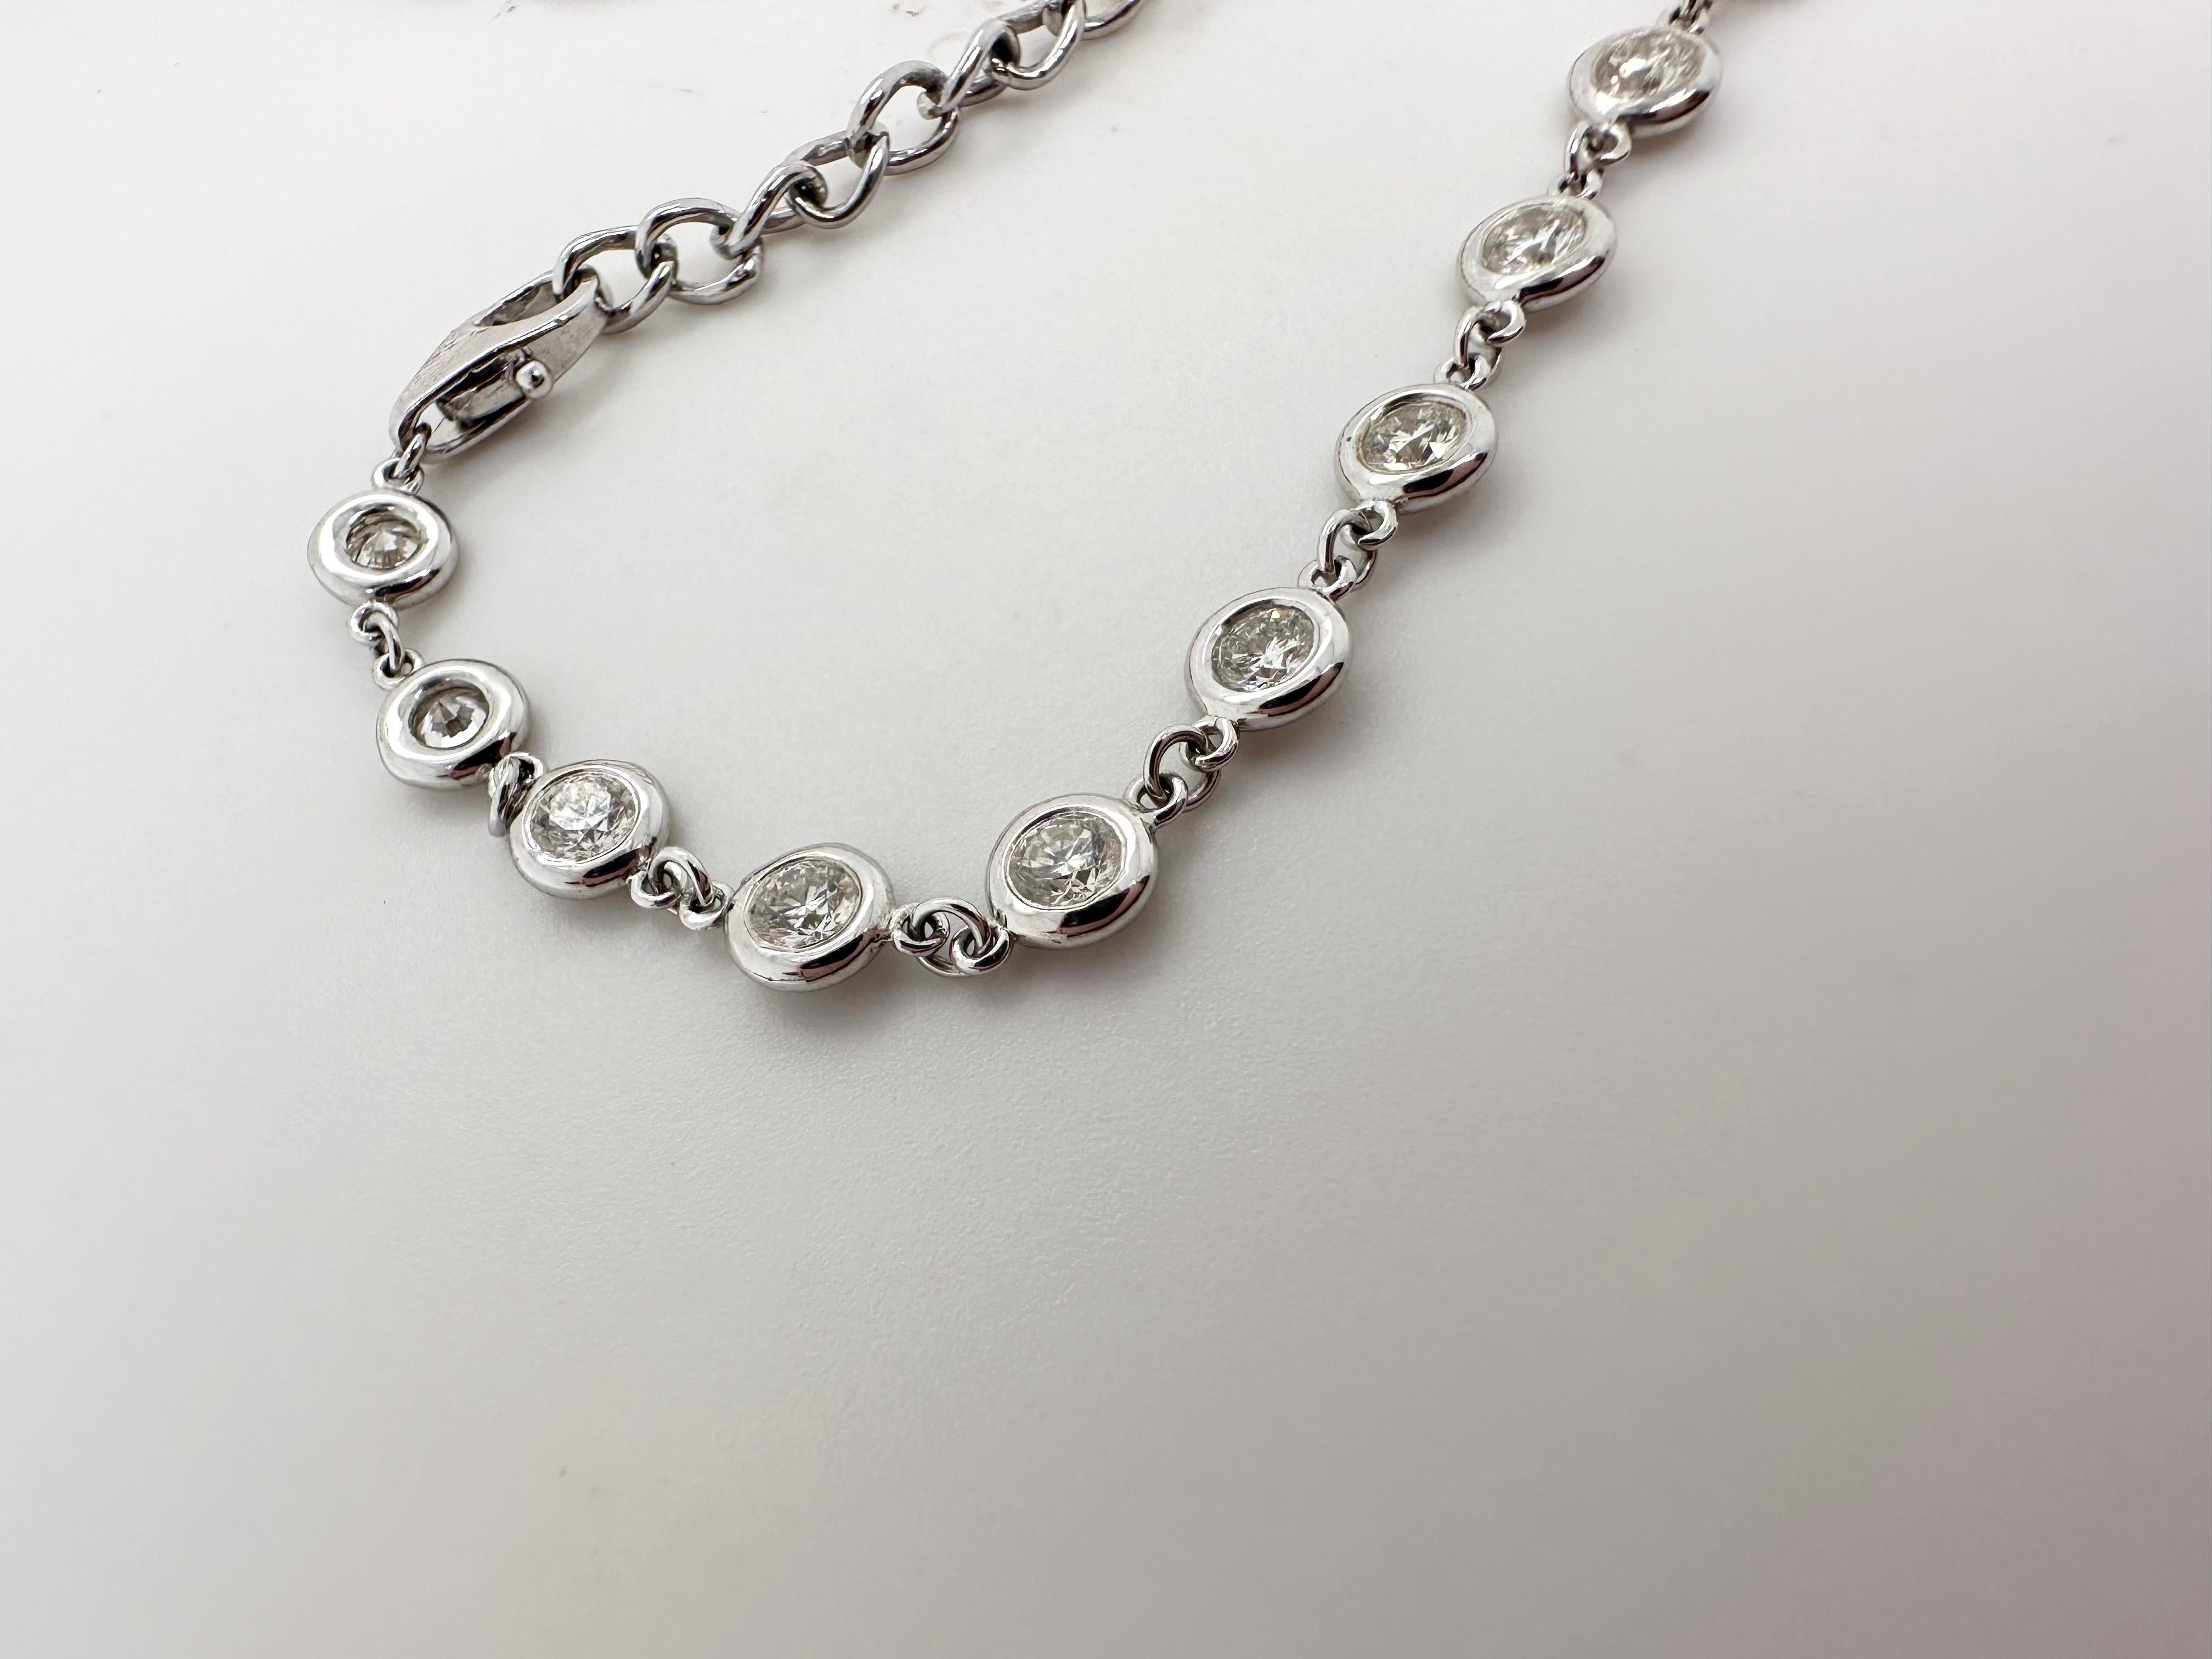 Simple diamond link bracelet in 14KT white gold.

Metal Type: 14KT
Gram Weight:4.36 grams 
Sixe:7